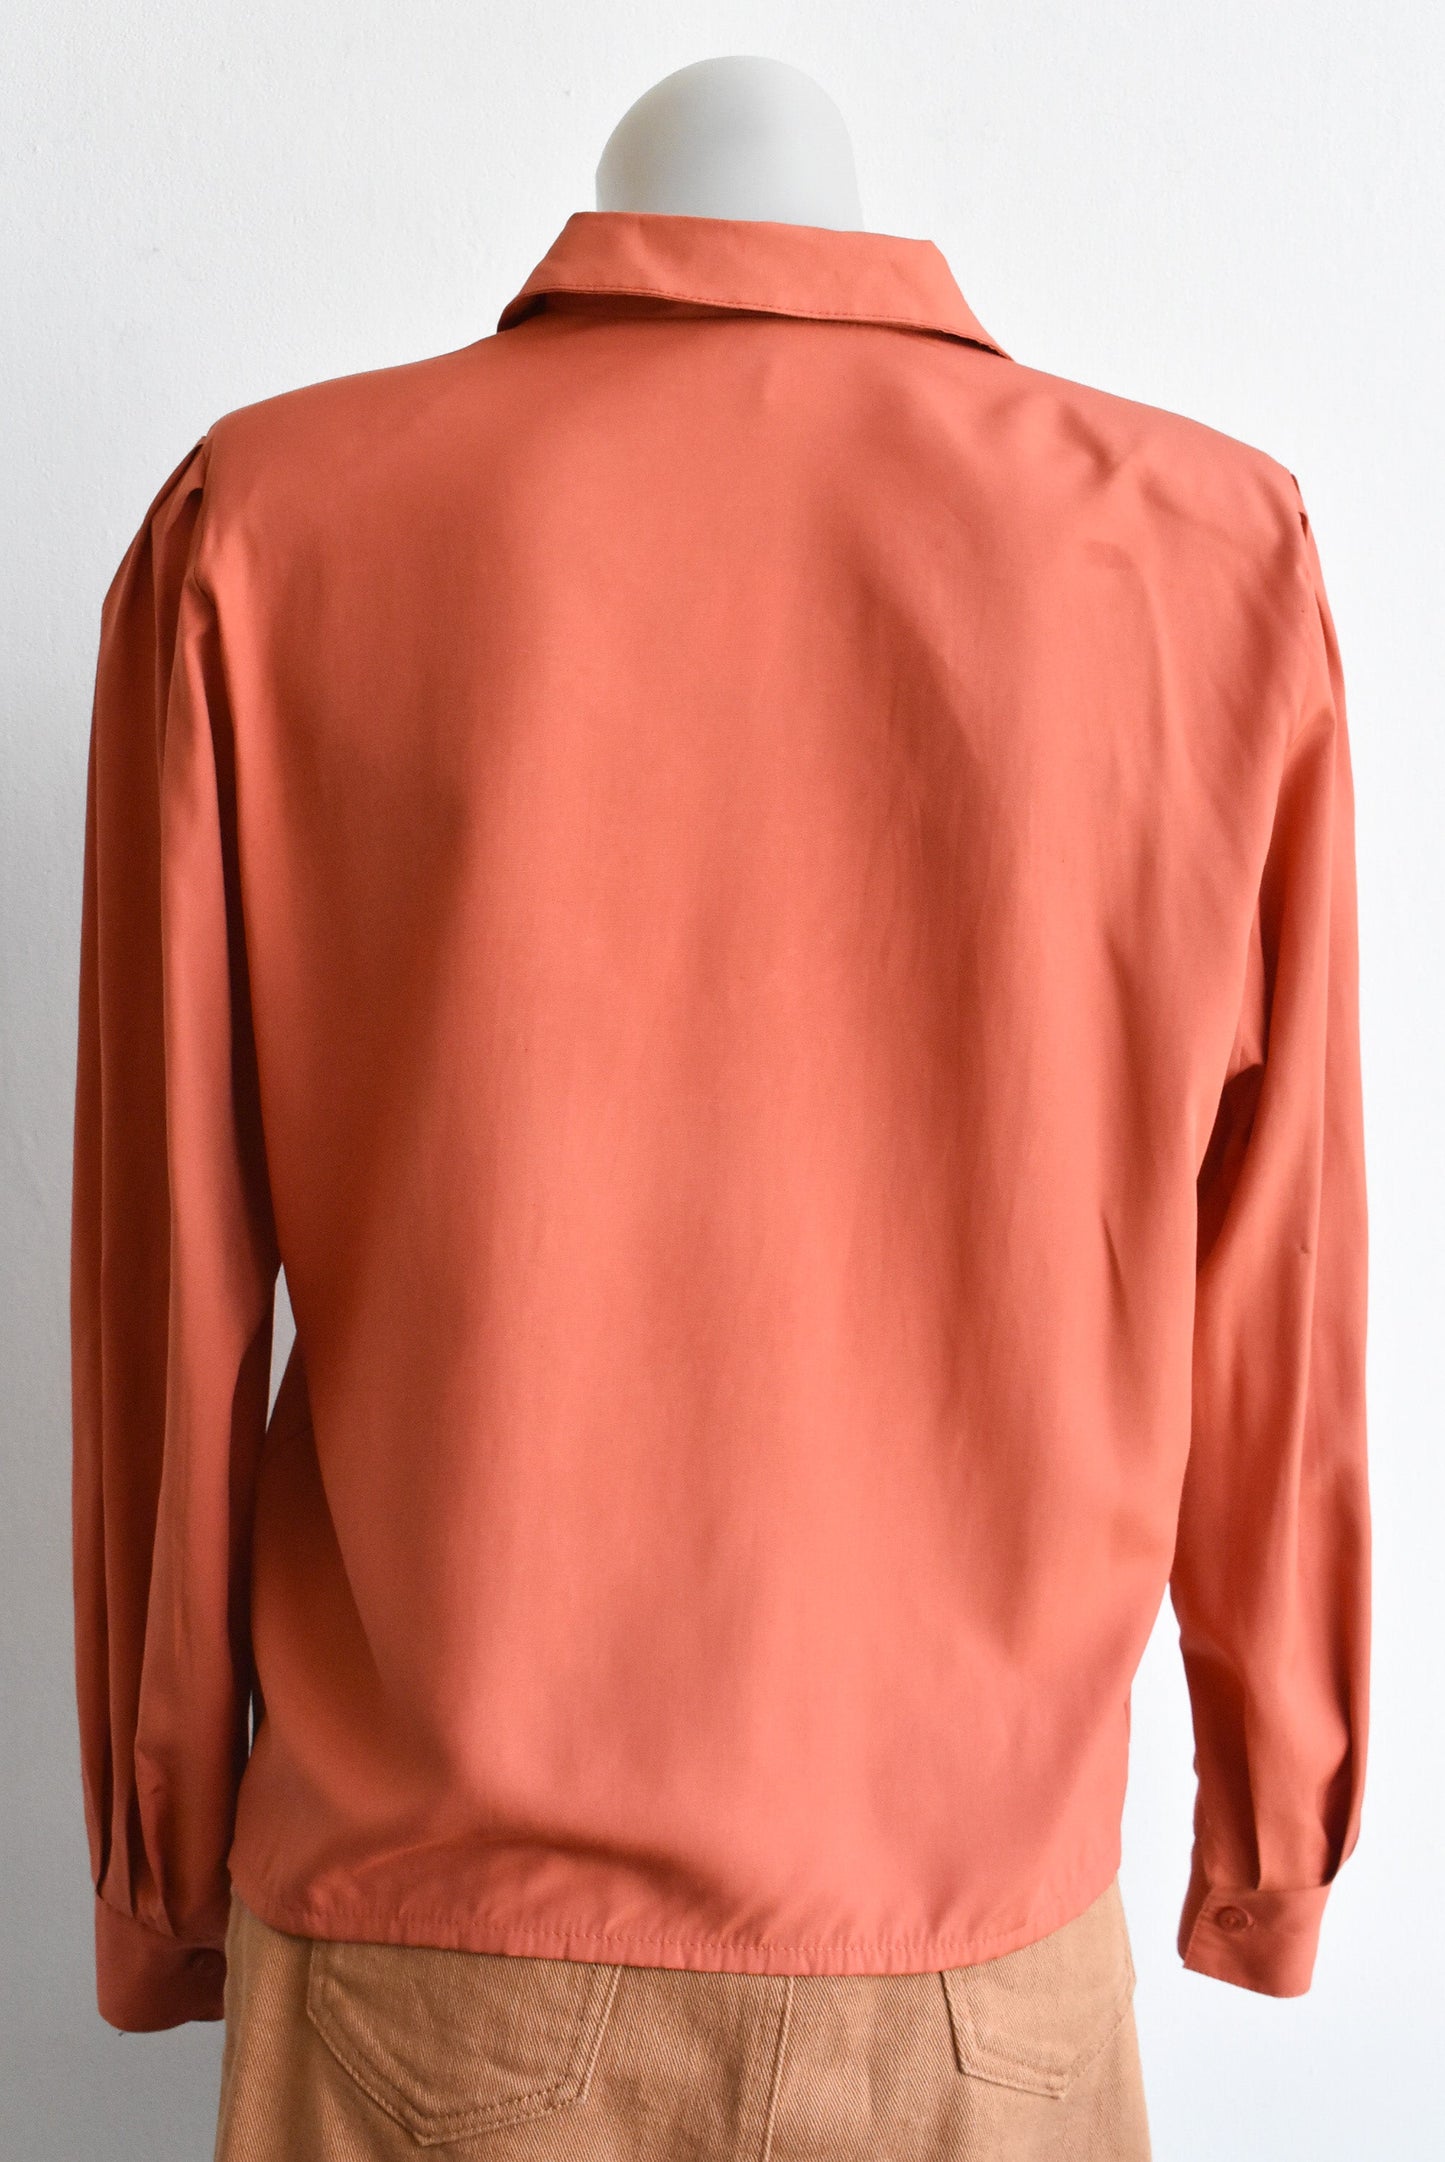 Retro EziBuy terracotta shoulder pad shirt, size 14